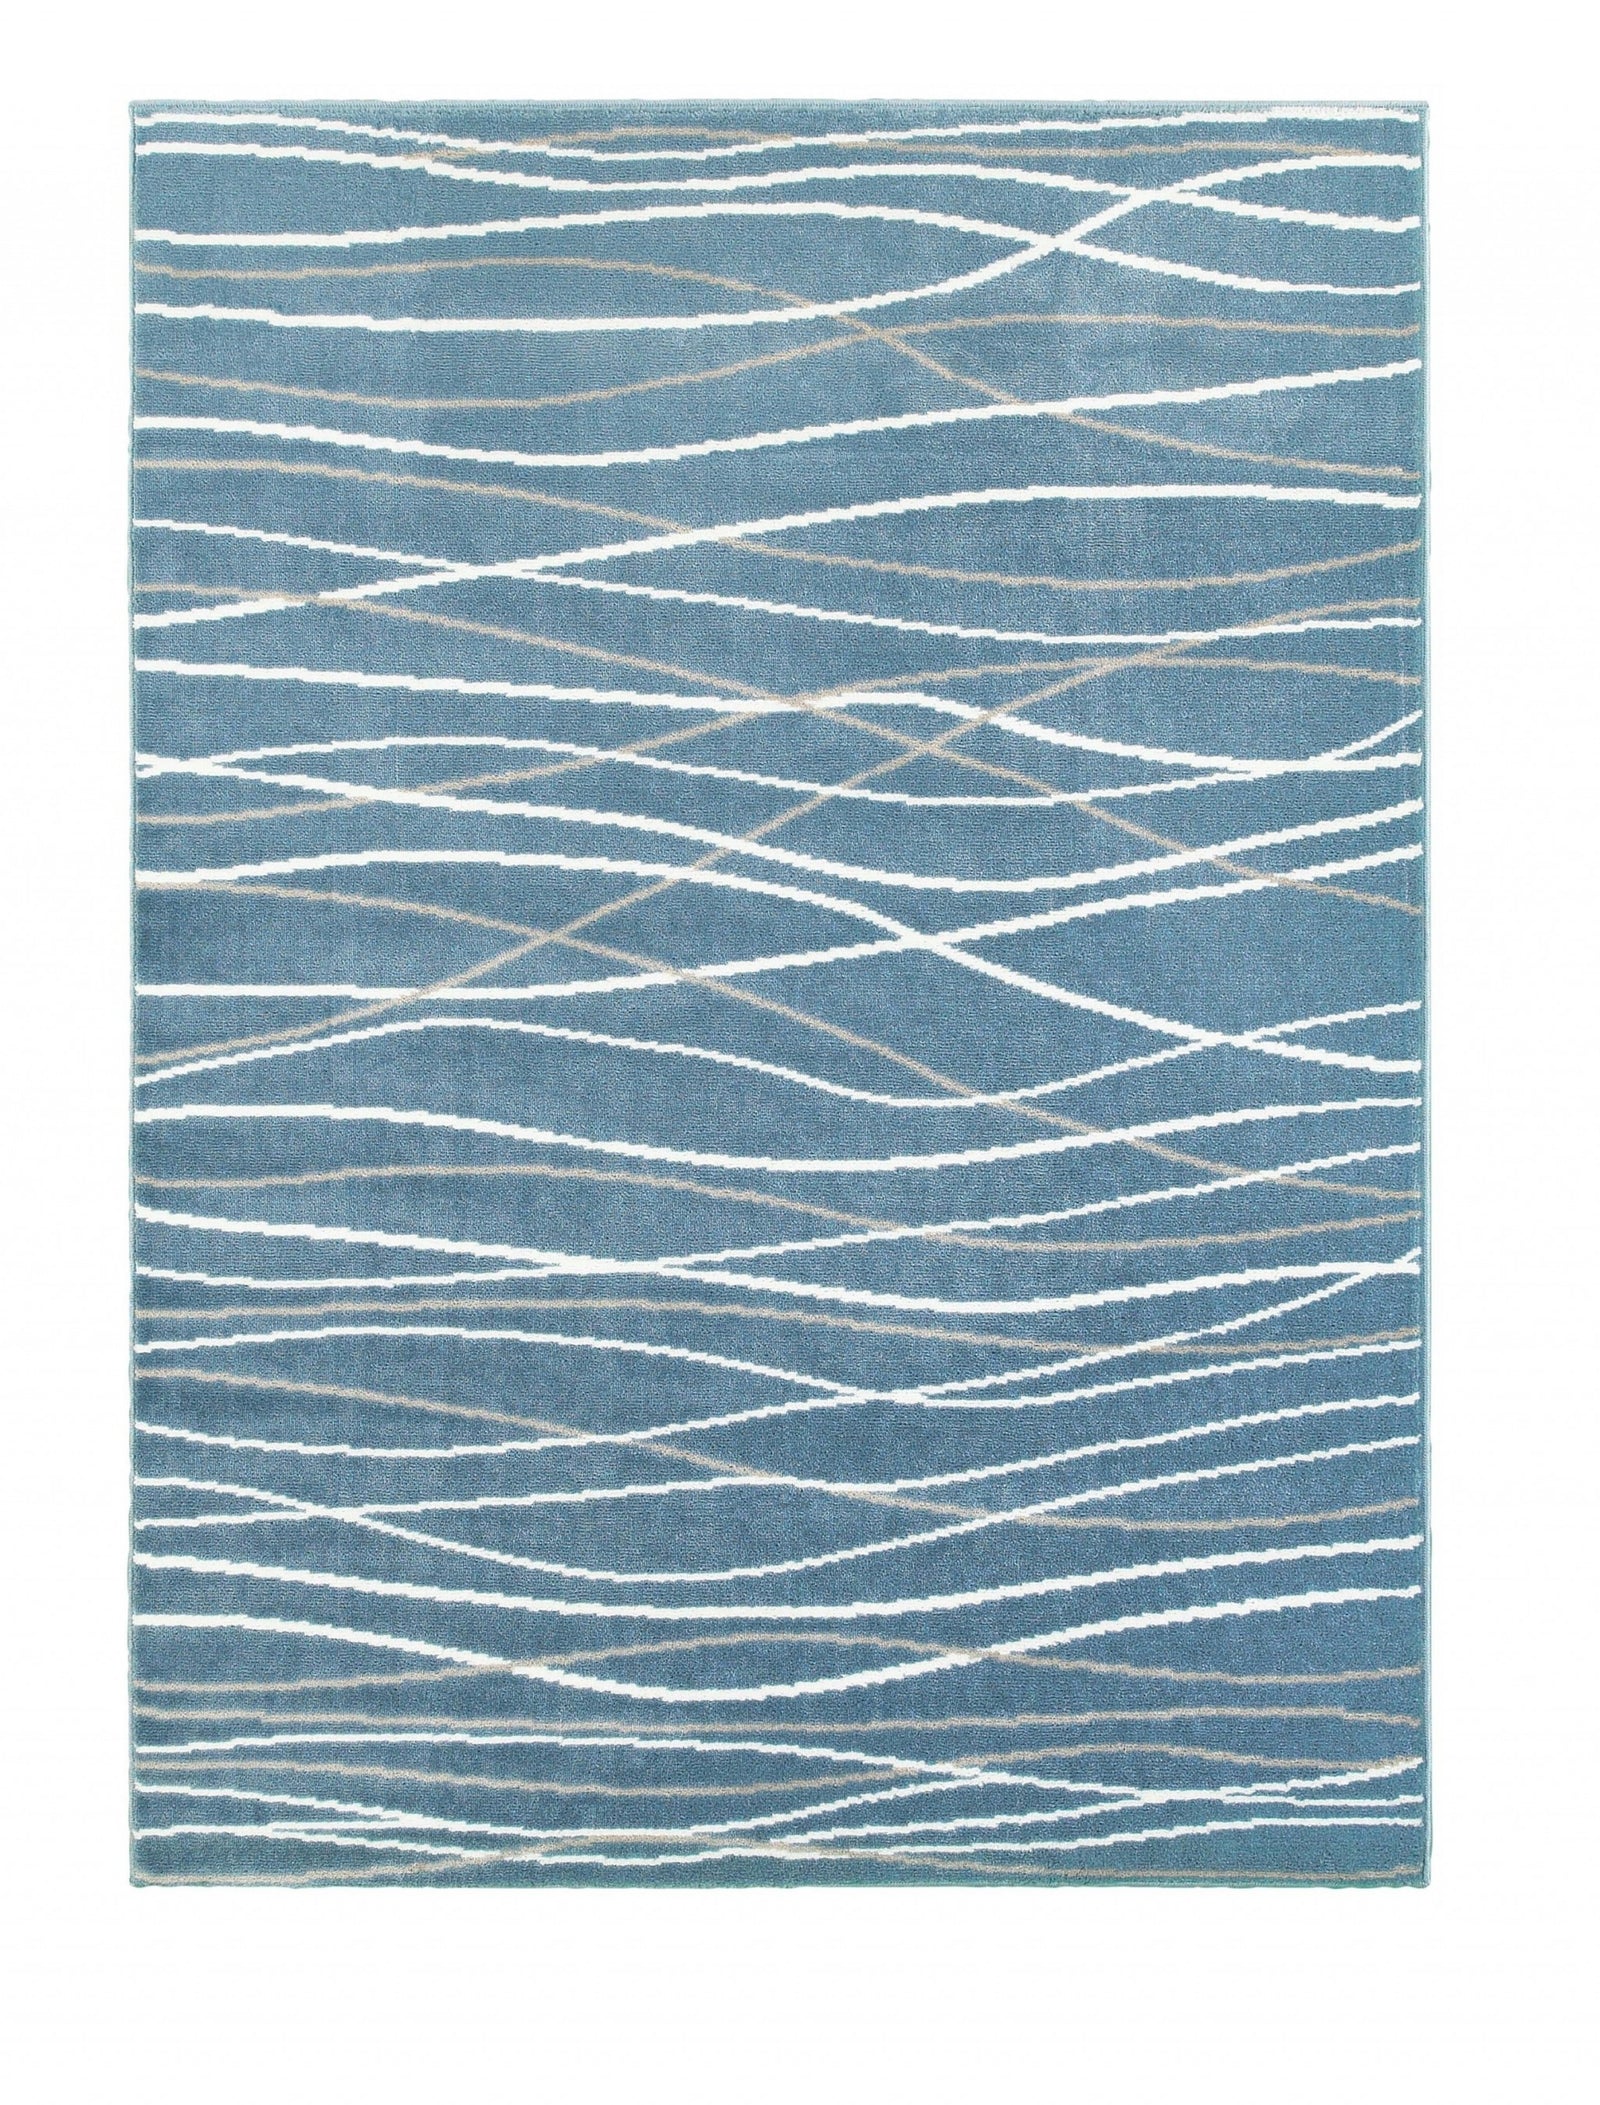 5’ x 7’ Blue Contemporary Waves Area Rug